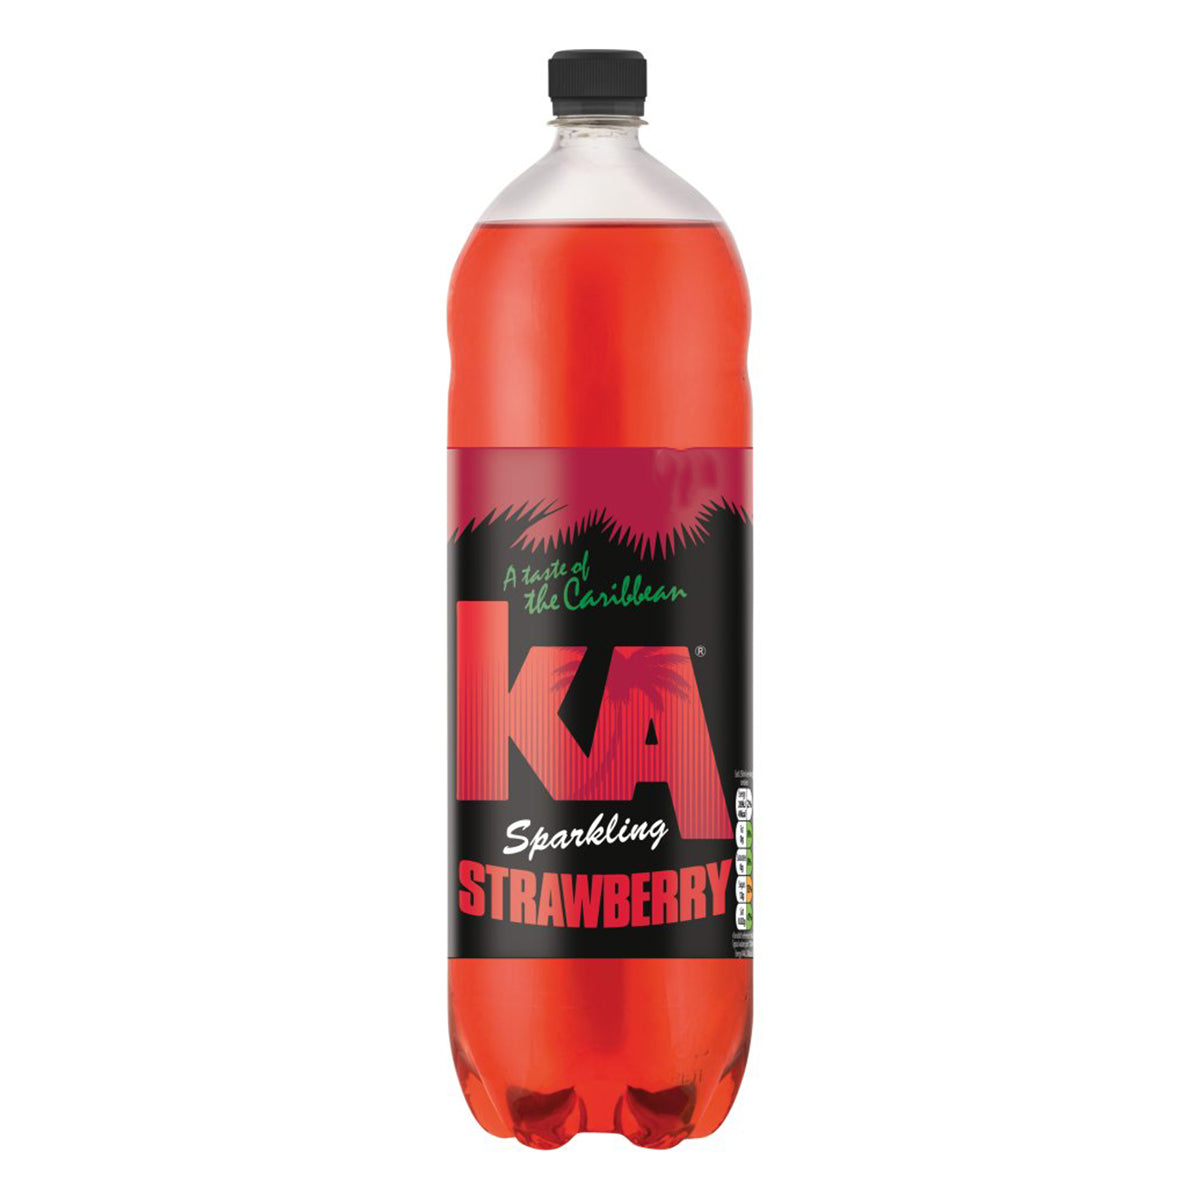 KA - Sparkling Strawberry - 2L - Continental Food Store